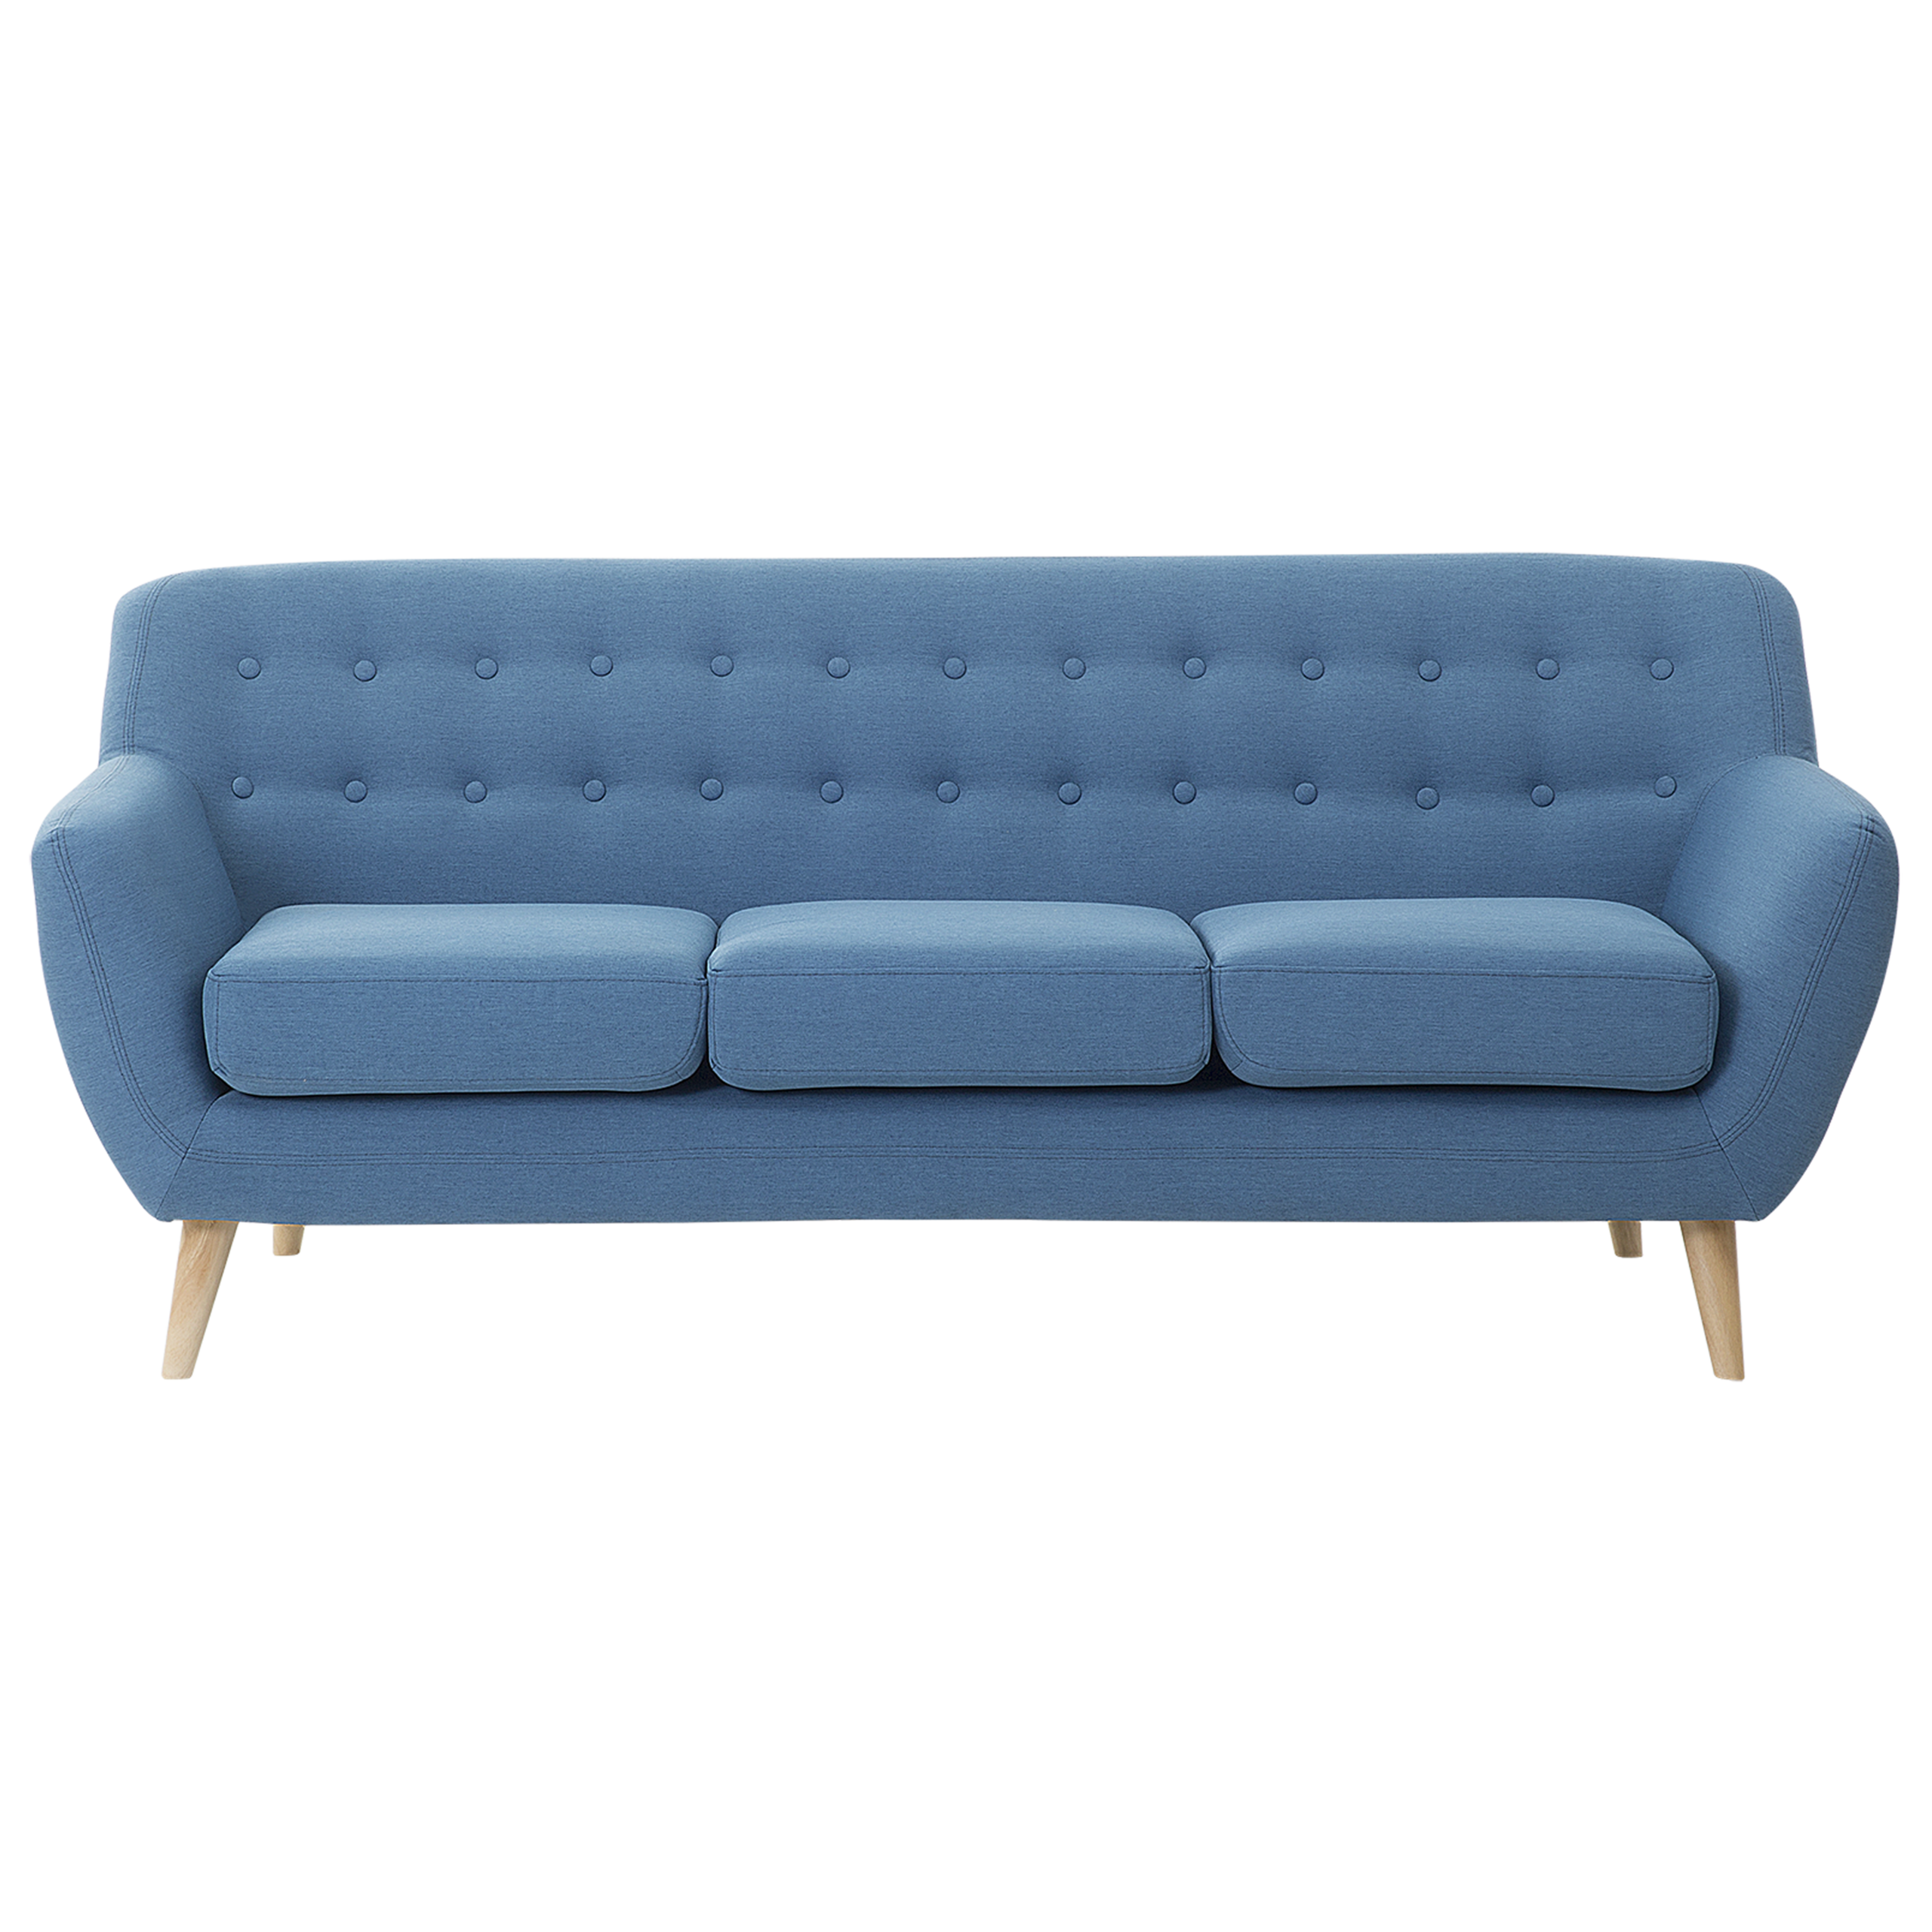 Beliani 3 Seater Sofa Blue Upholstered Tufted Back Thickly Padded Light Wood Legs Scandinavian Minimalist Living Room